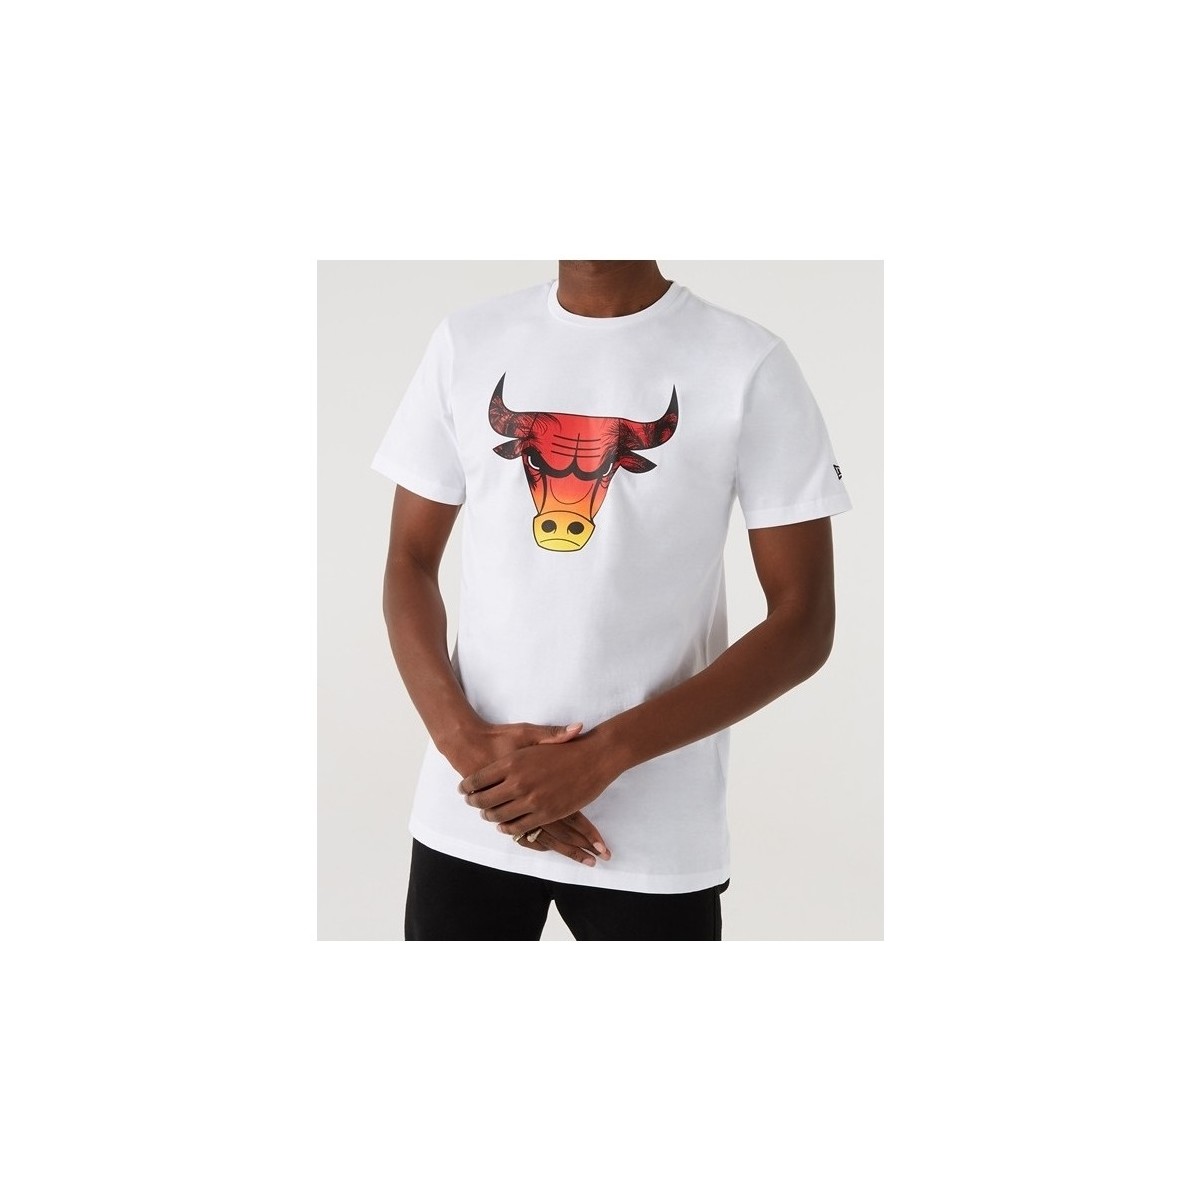 Vêtements Homme T-shirts manches courtes New-Era - T-shirt NBA Summer City - Chicago Bulls Blanc